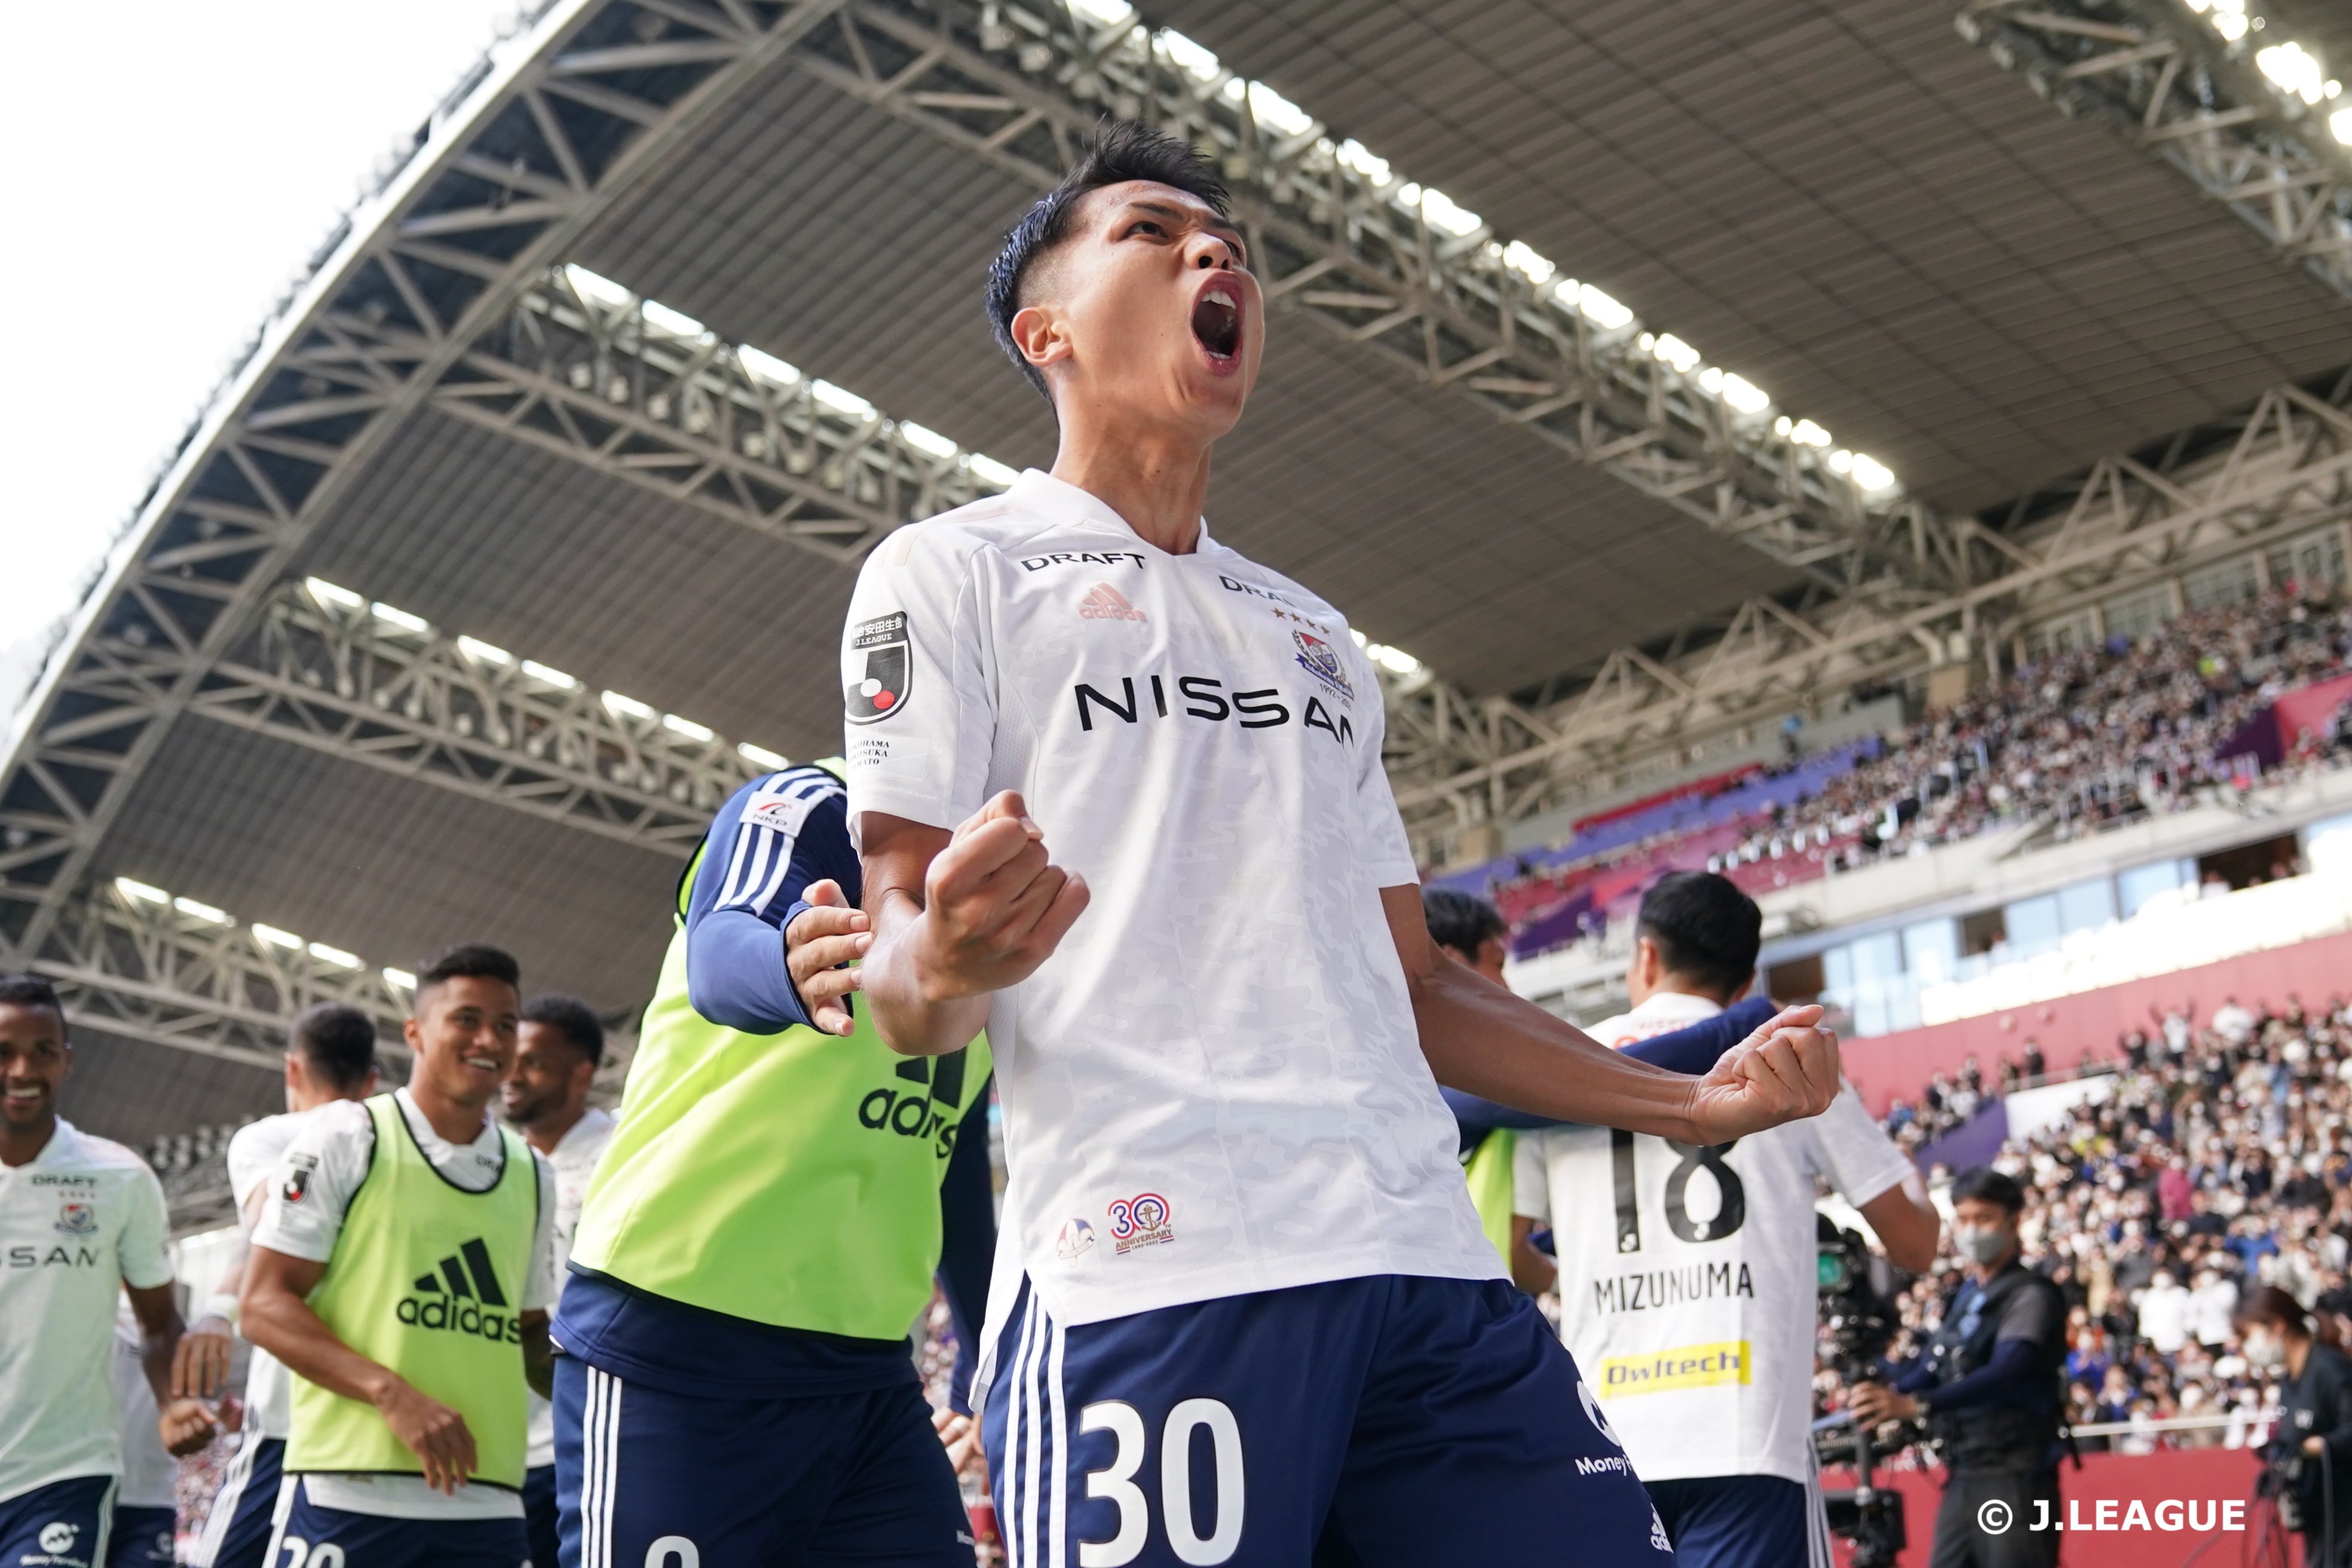 Daftar Juara J1 League Sepanjang Masa: Yokohama F. Marinos Dekati Kashima Antlers